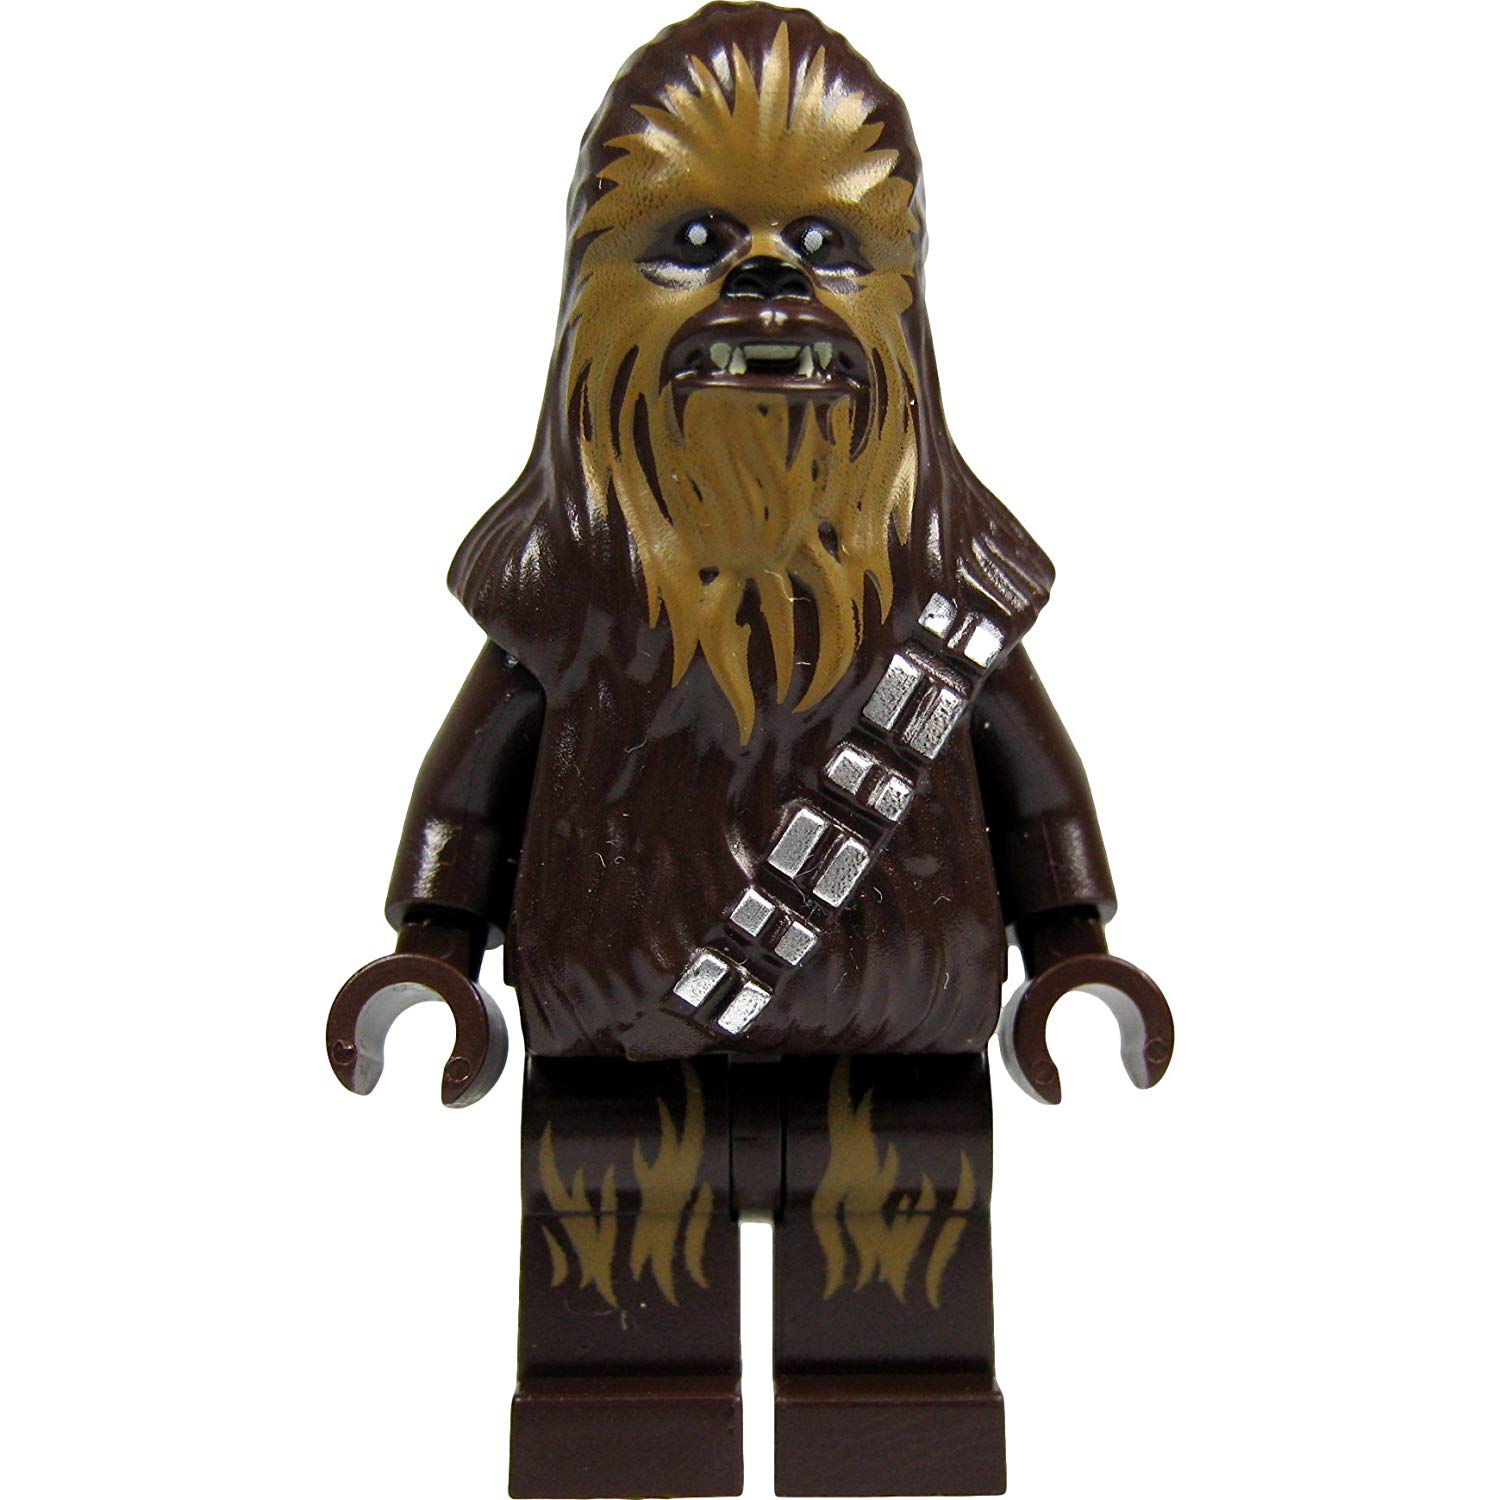 Lego Star Wars Minifigure: Chewbacca (75042)